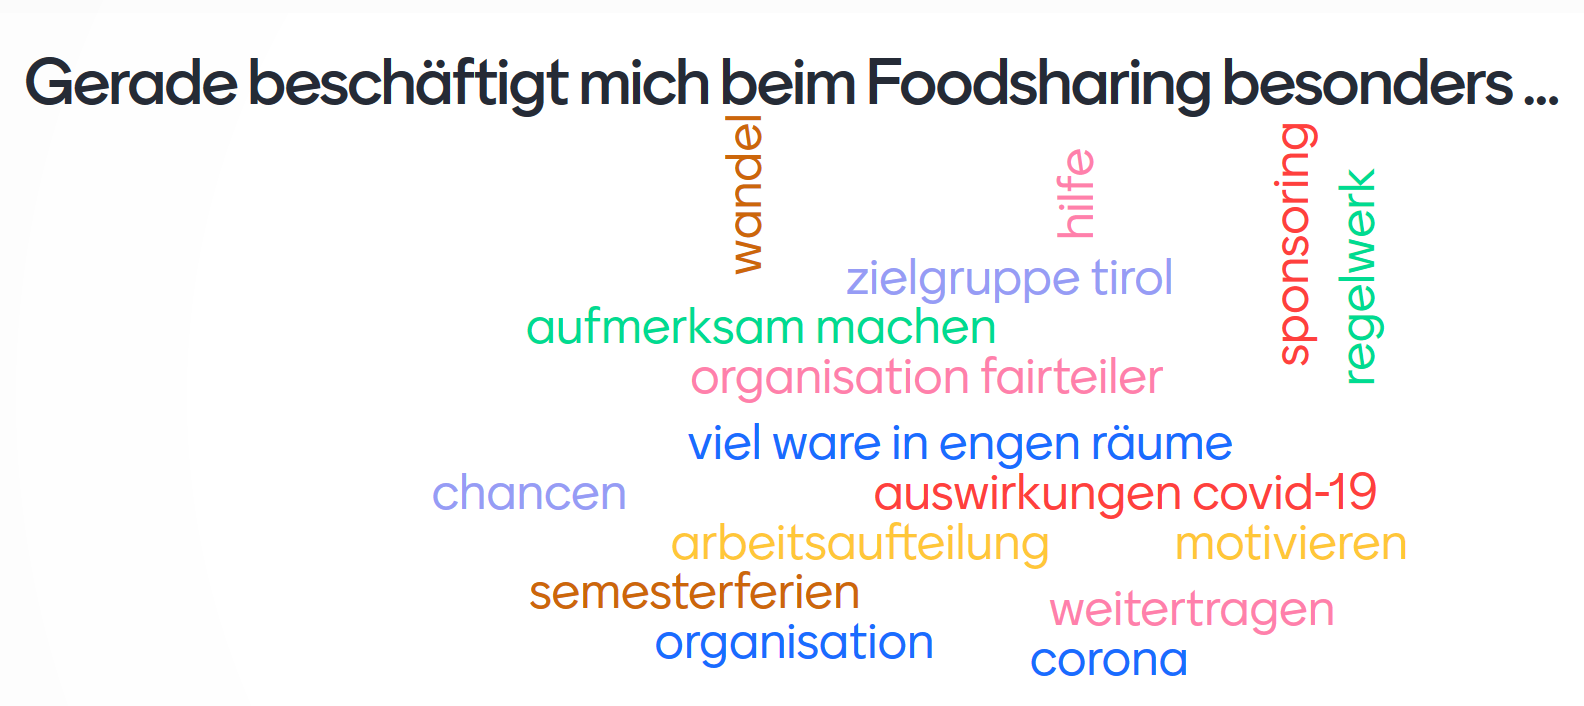 Wordcloud mit menti.com erstellt zum Thema Foodsharing